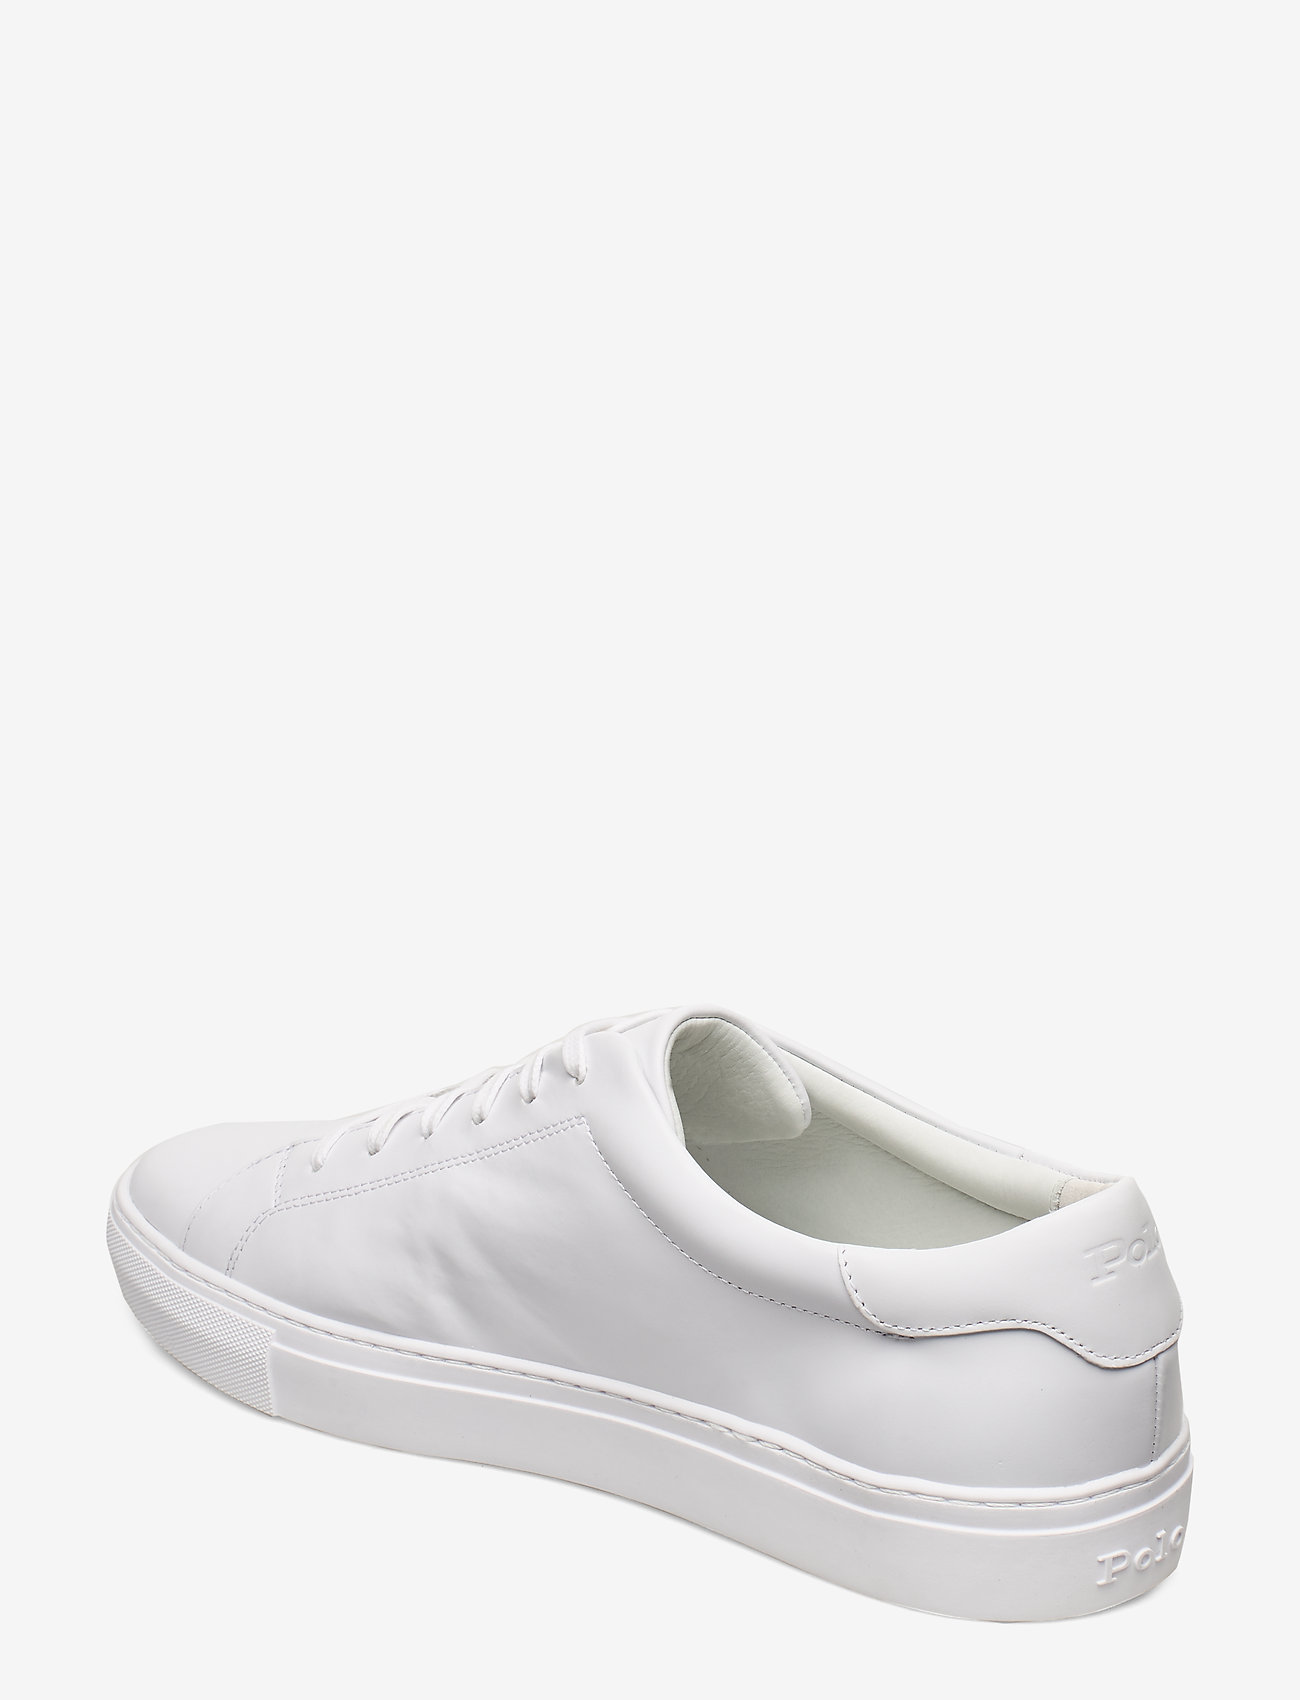 Polo Ralph Lauren - Jermain Leather Sneaker - white - 1